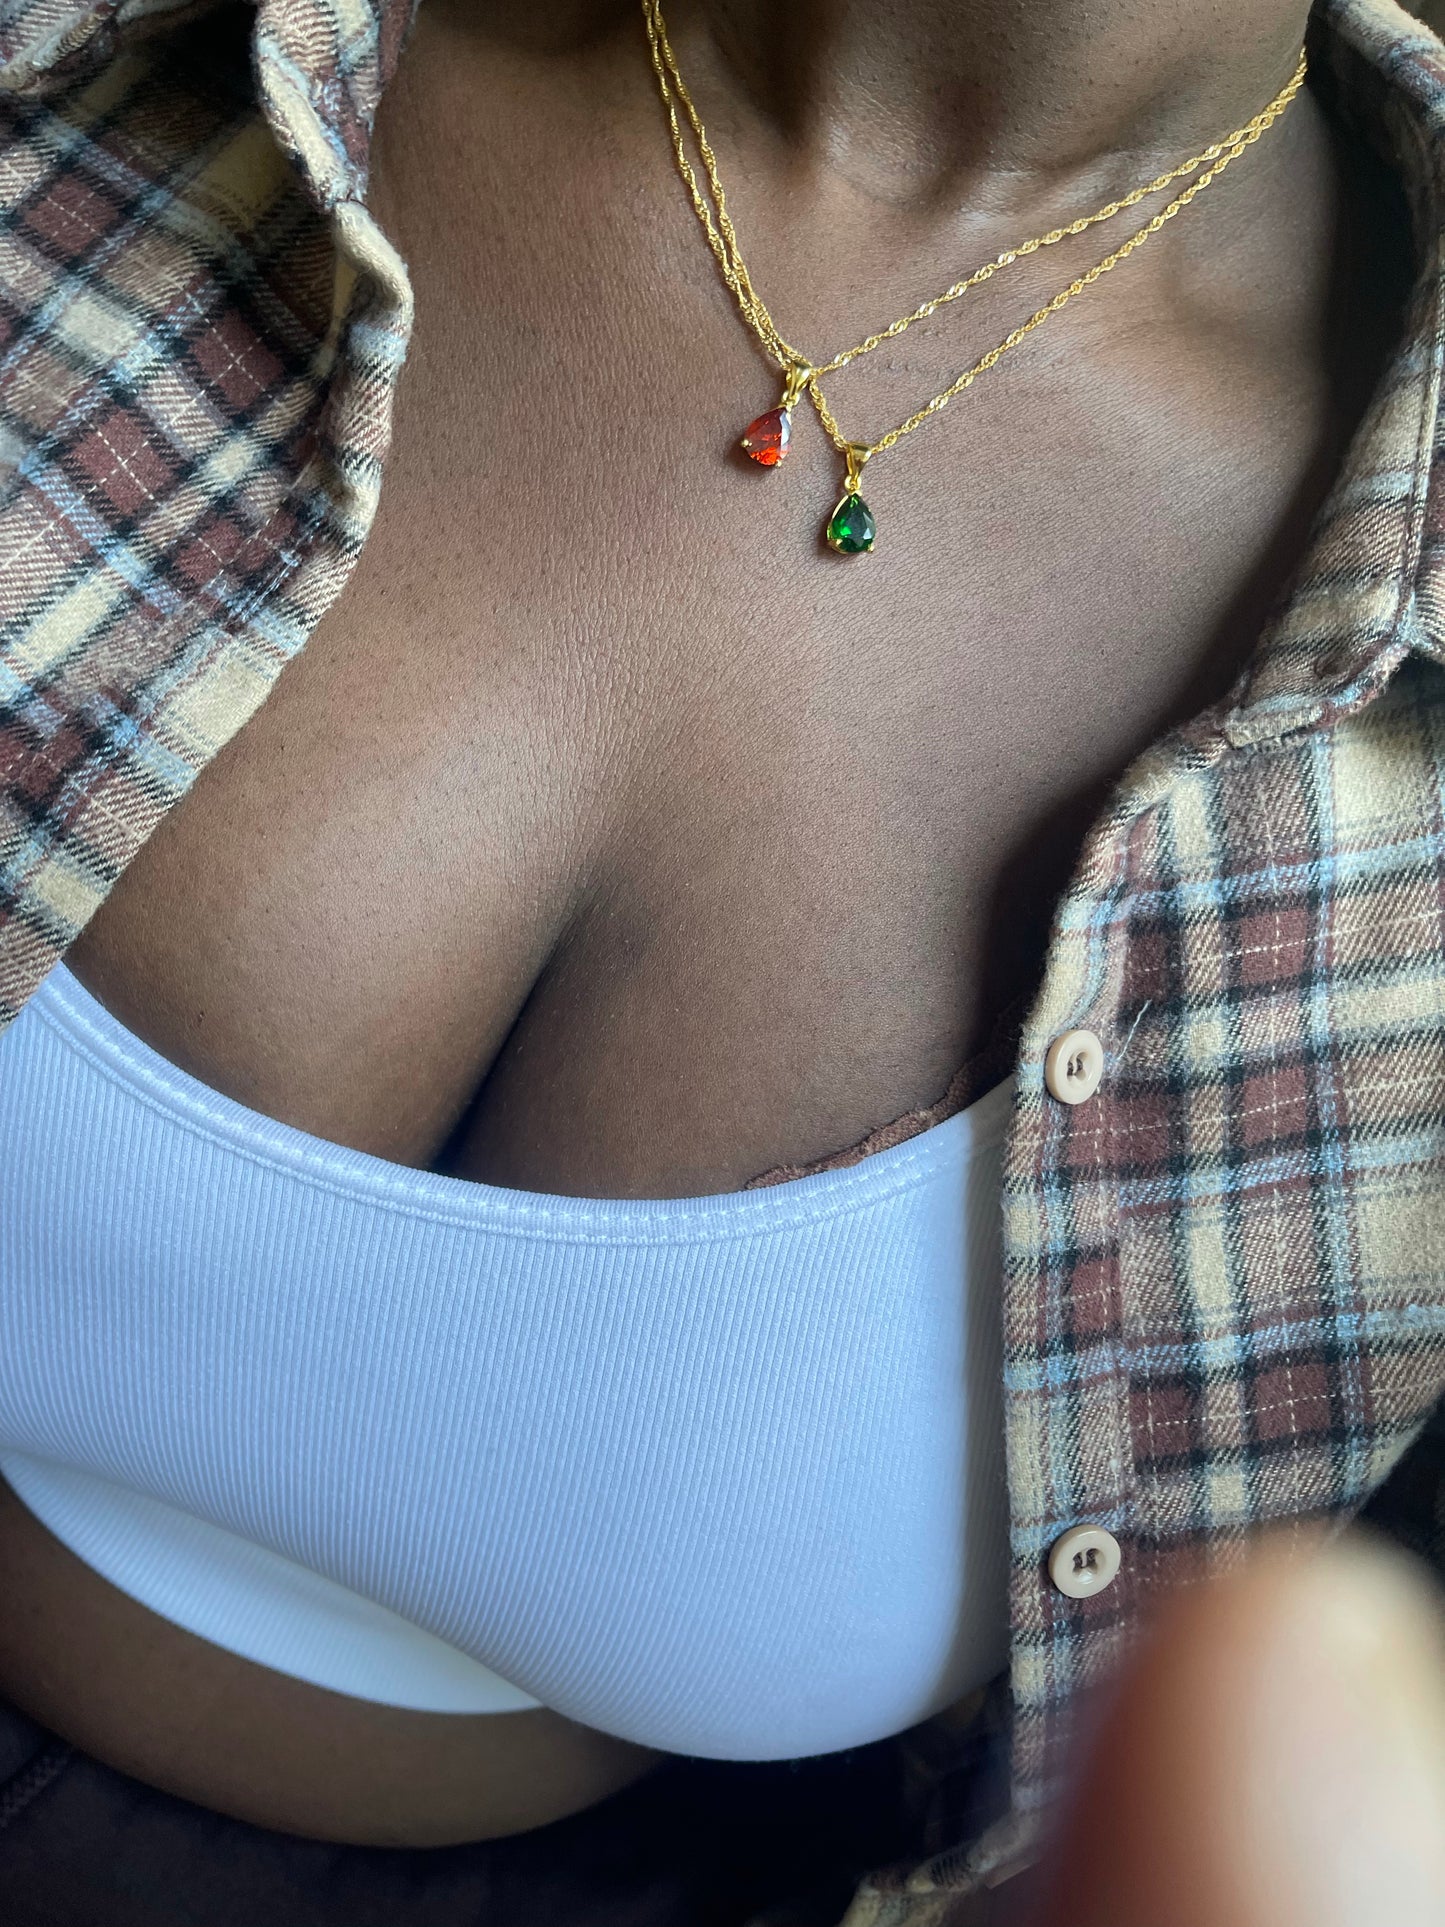 Gem necklace